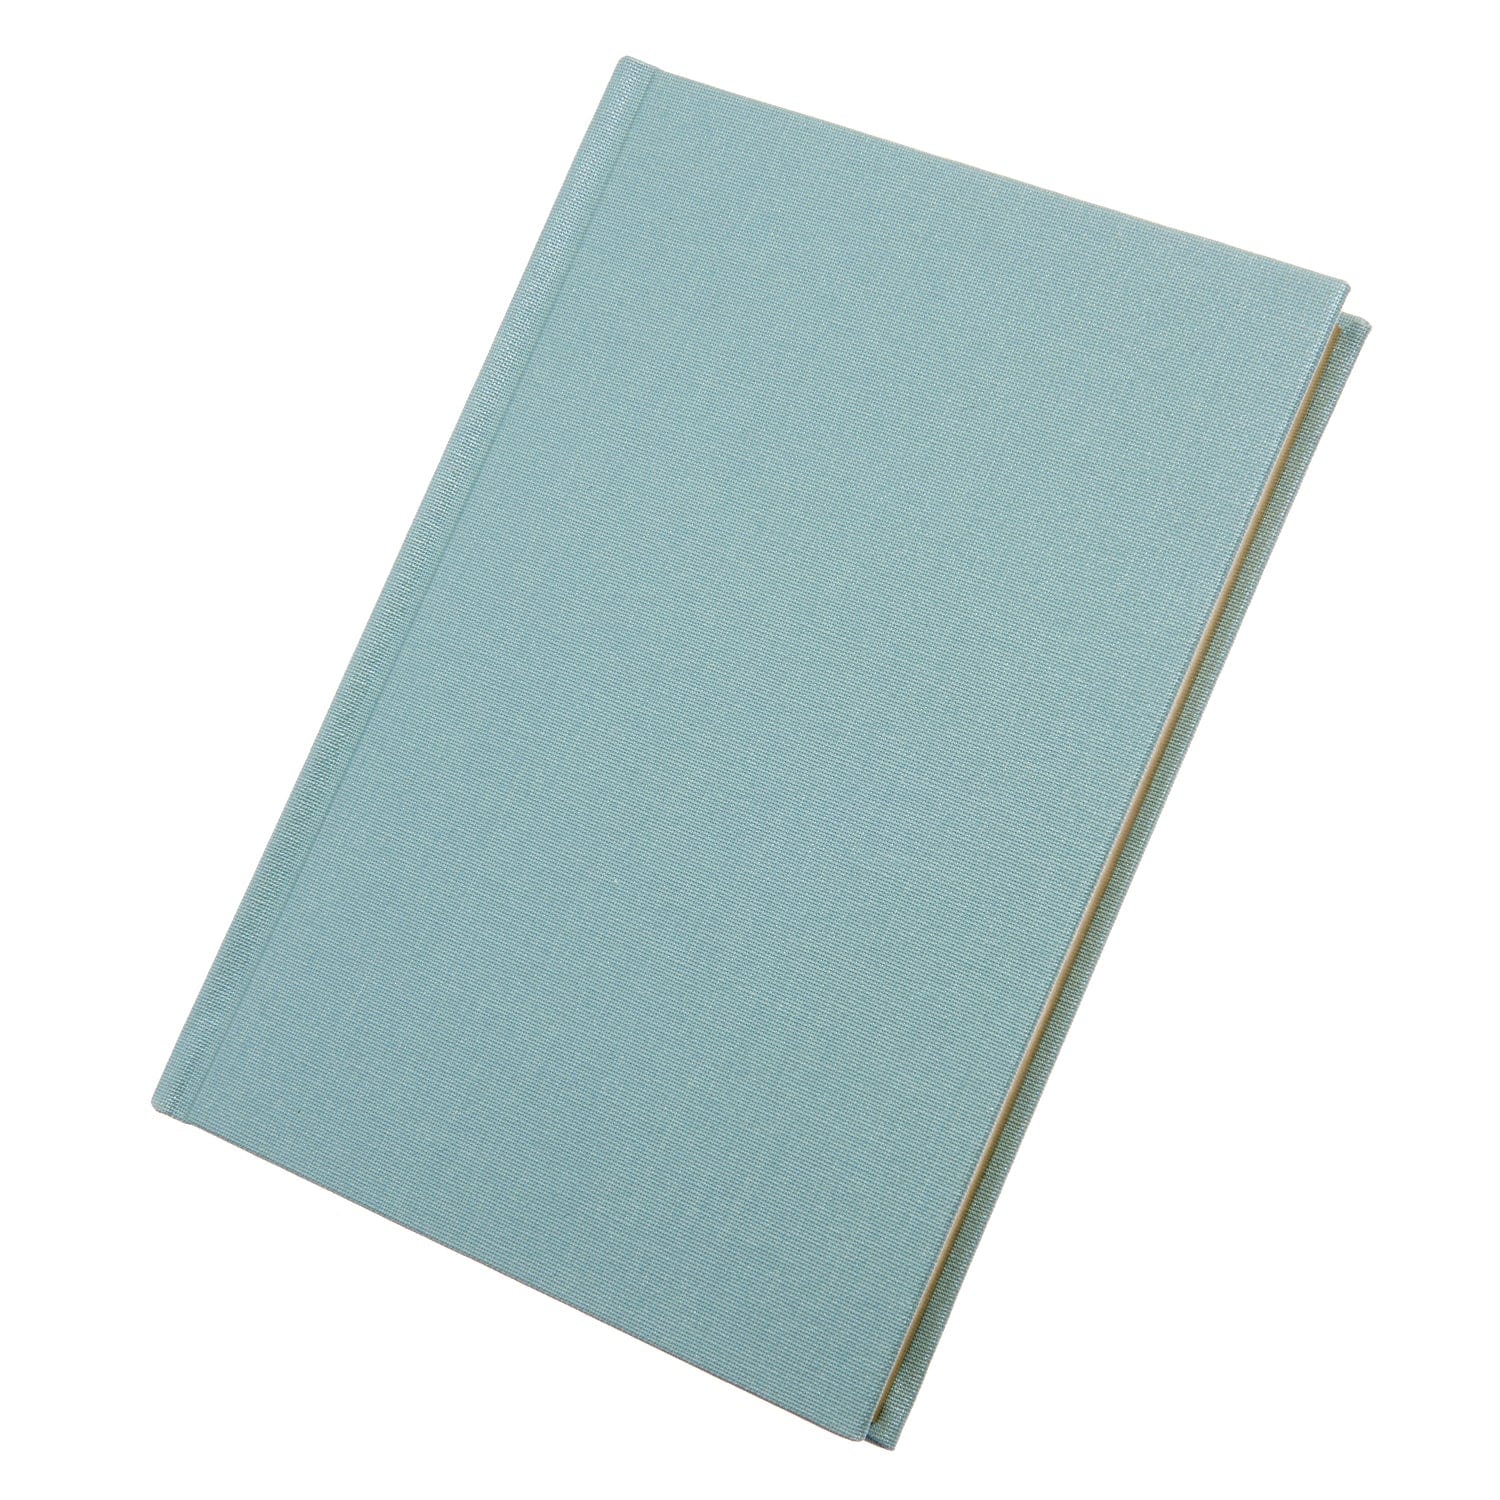 Book cloth, hardcover bookcloth, book binding cloth